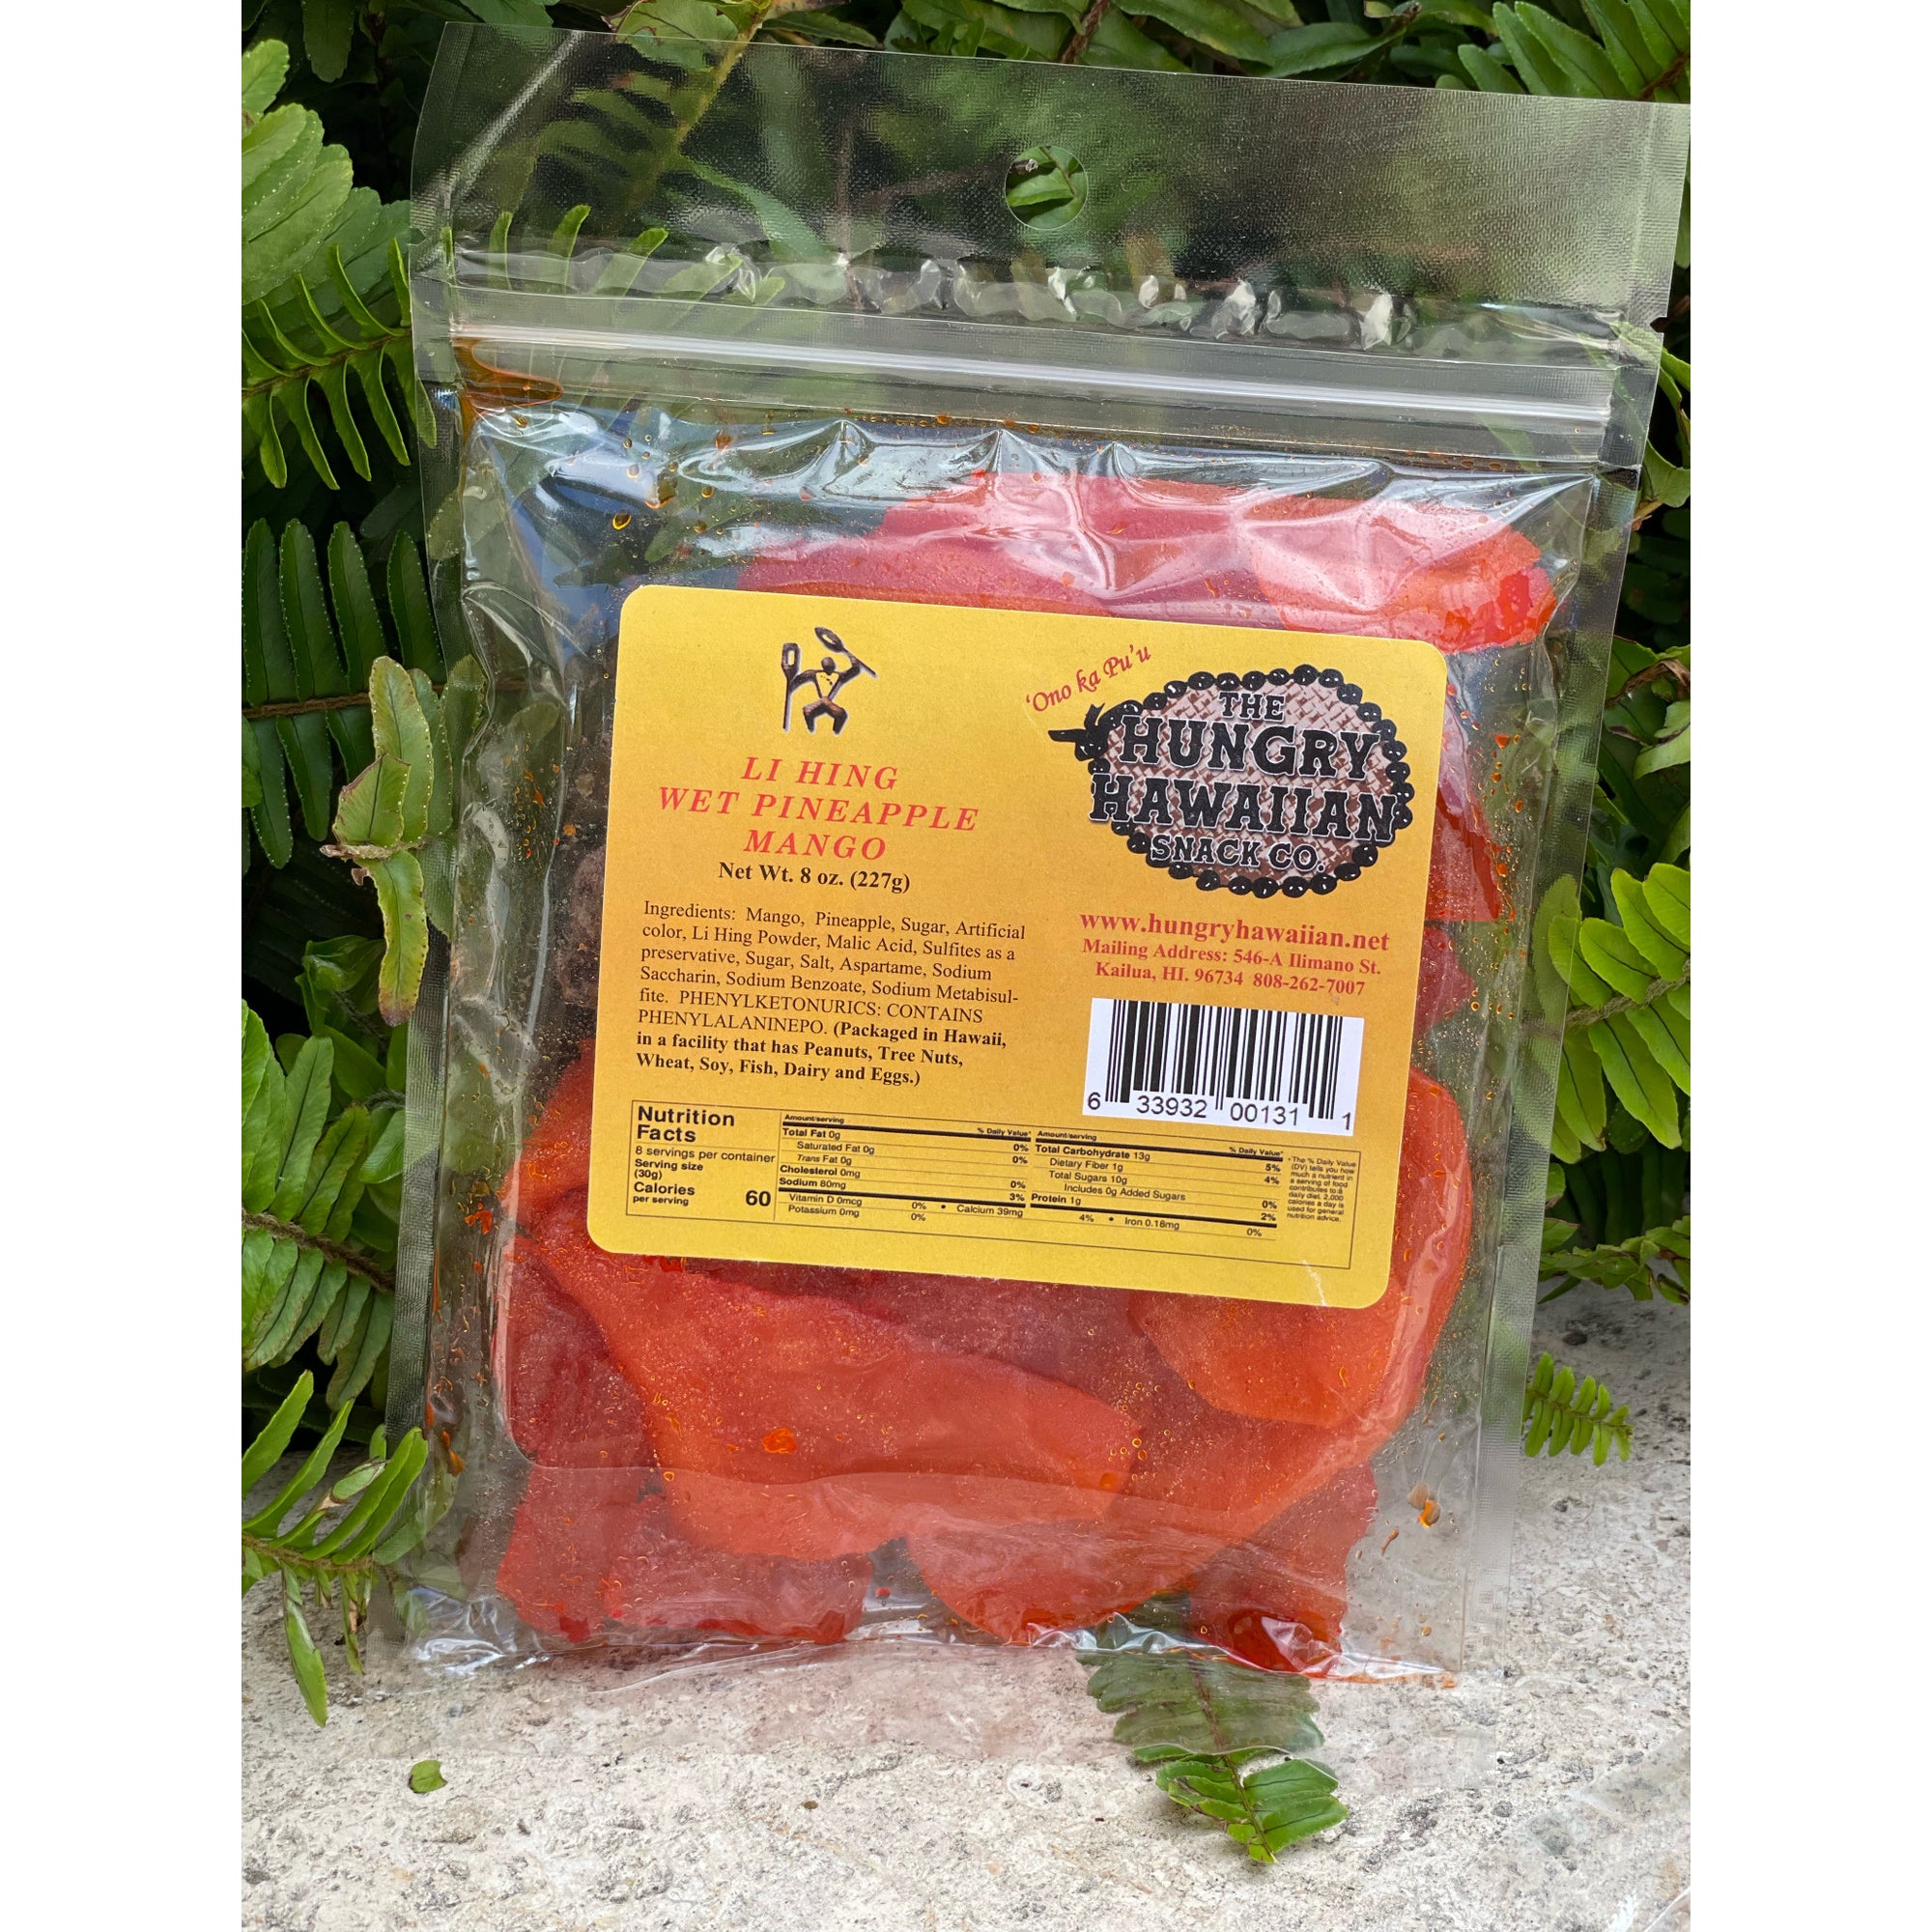 Pop-Up Mākeke - The Hungry Hawaiian Snack Co. - Li Hing Wet Pineapple Mango Slices